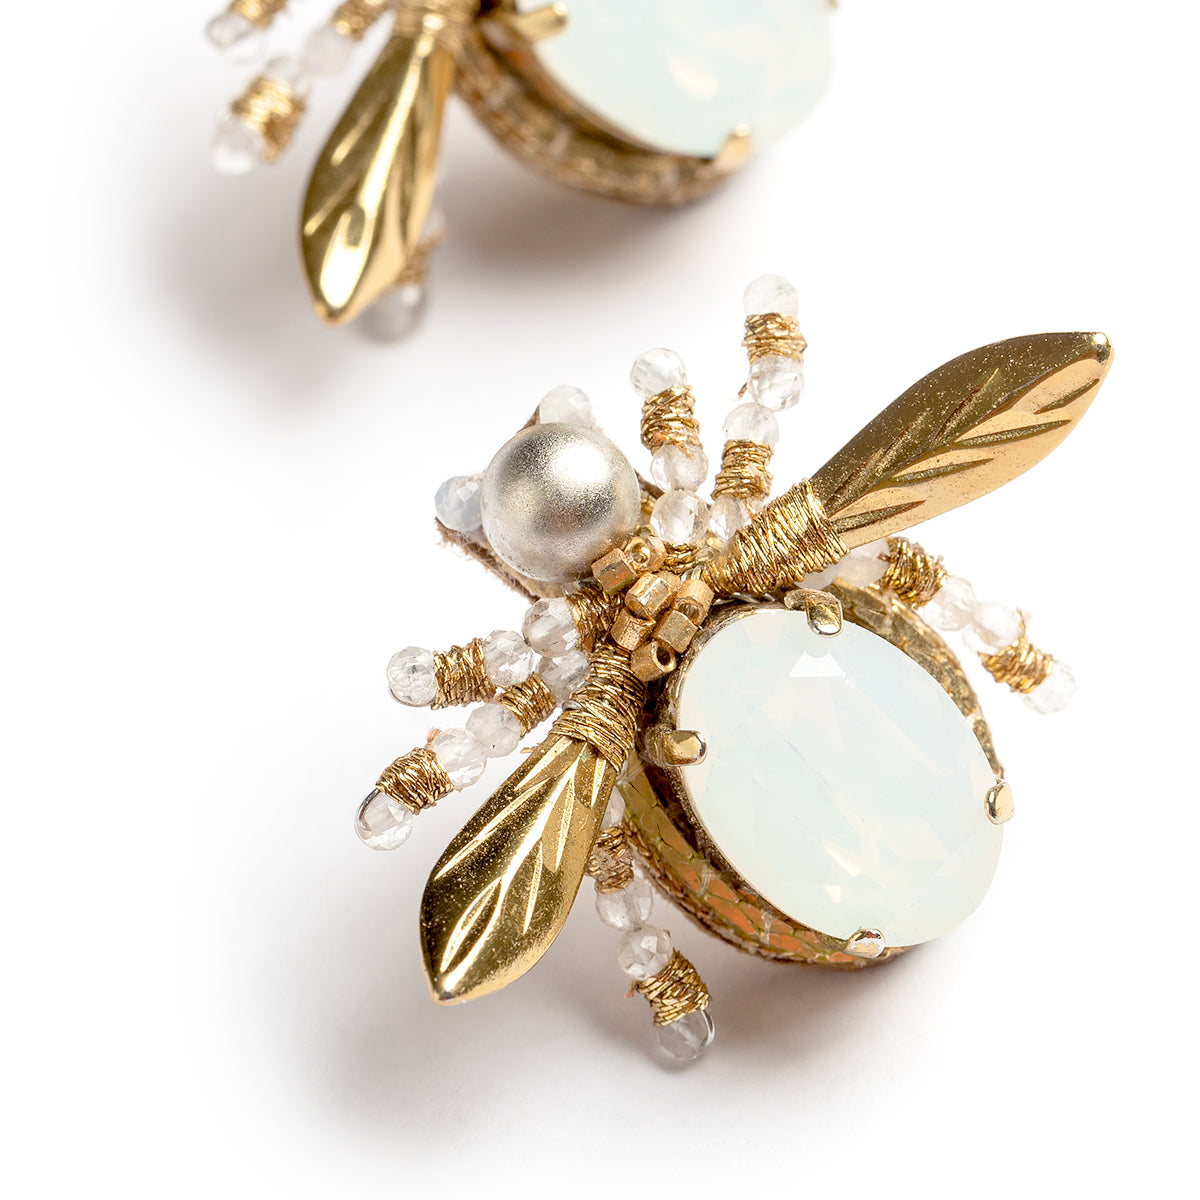 Deepa Gurnani handmade the Firefly earrings in opal color